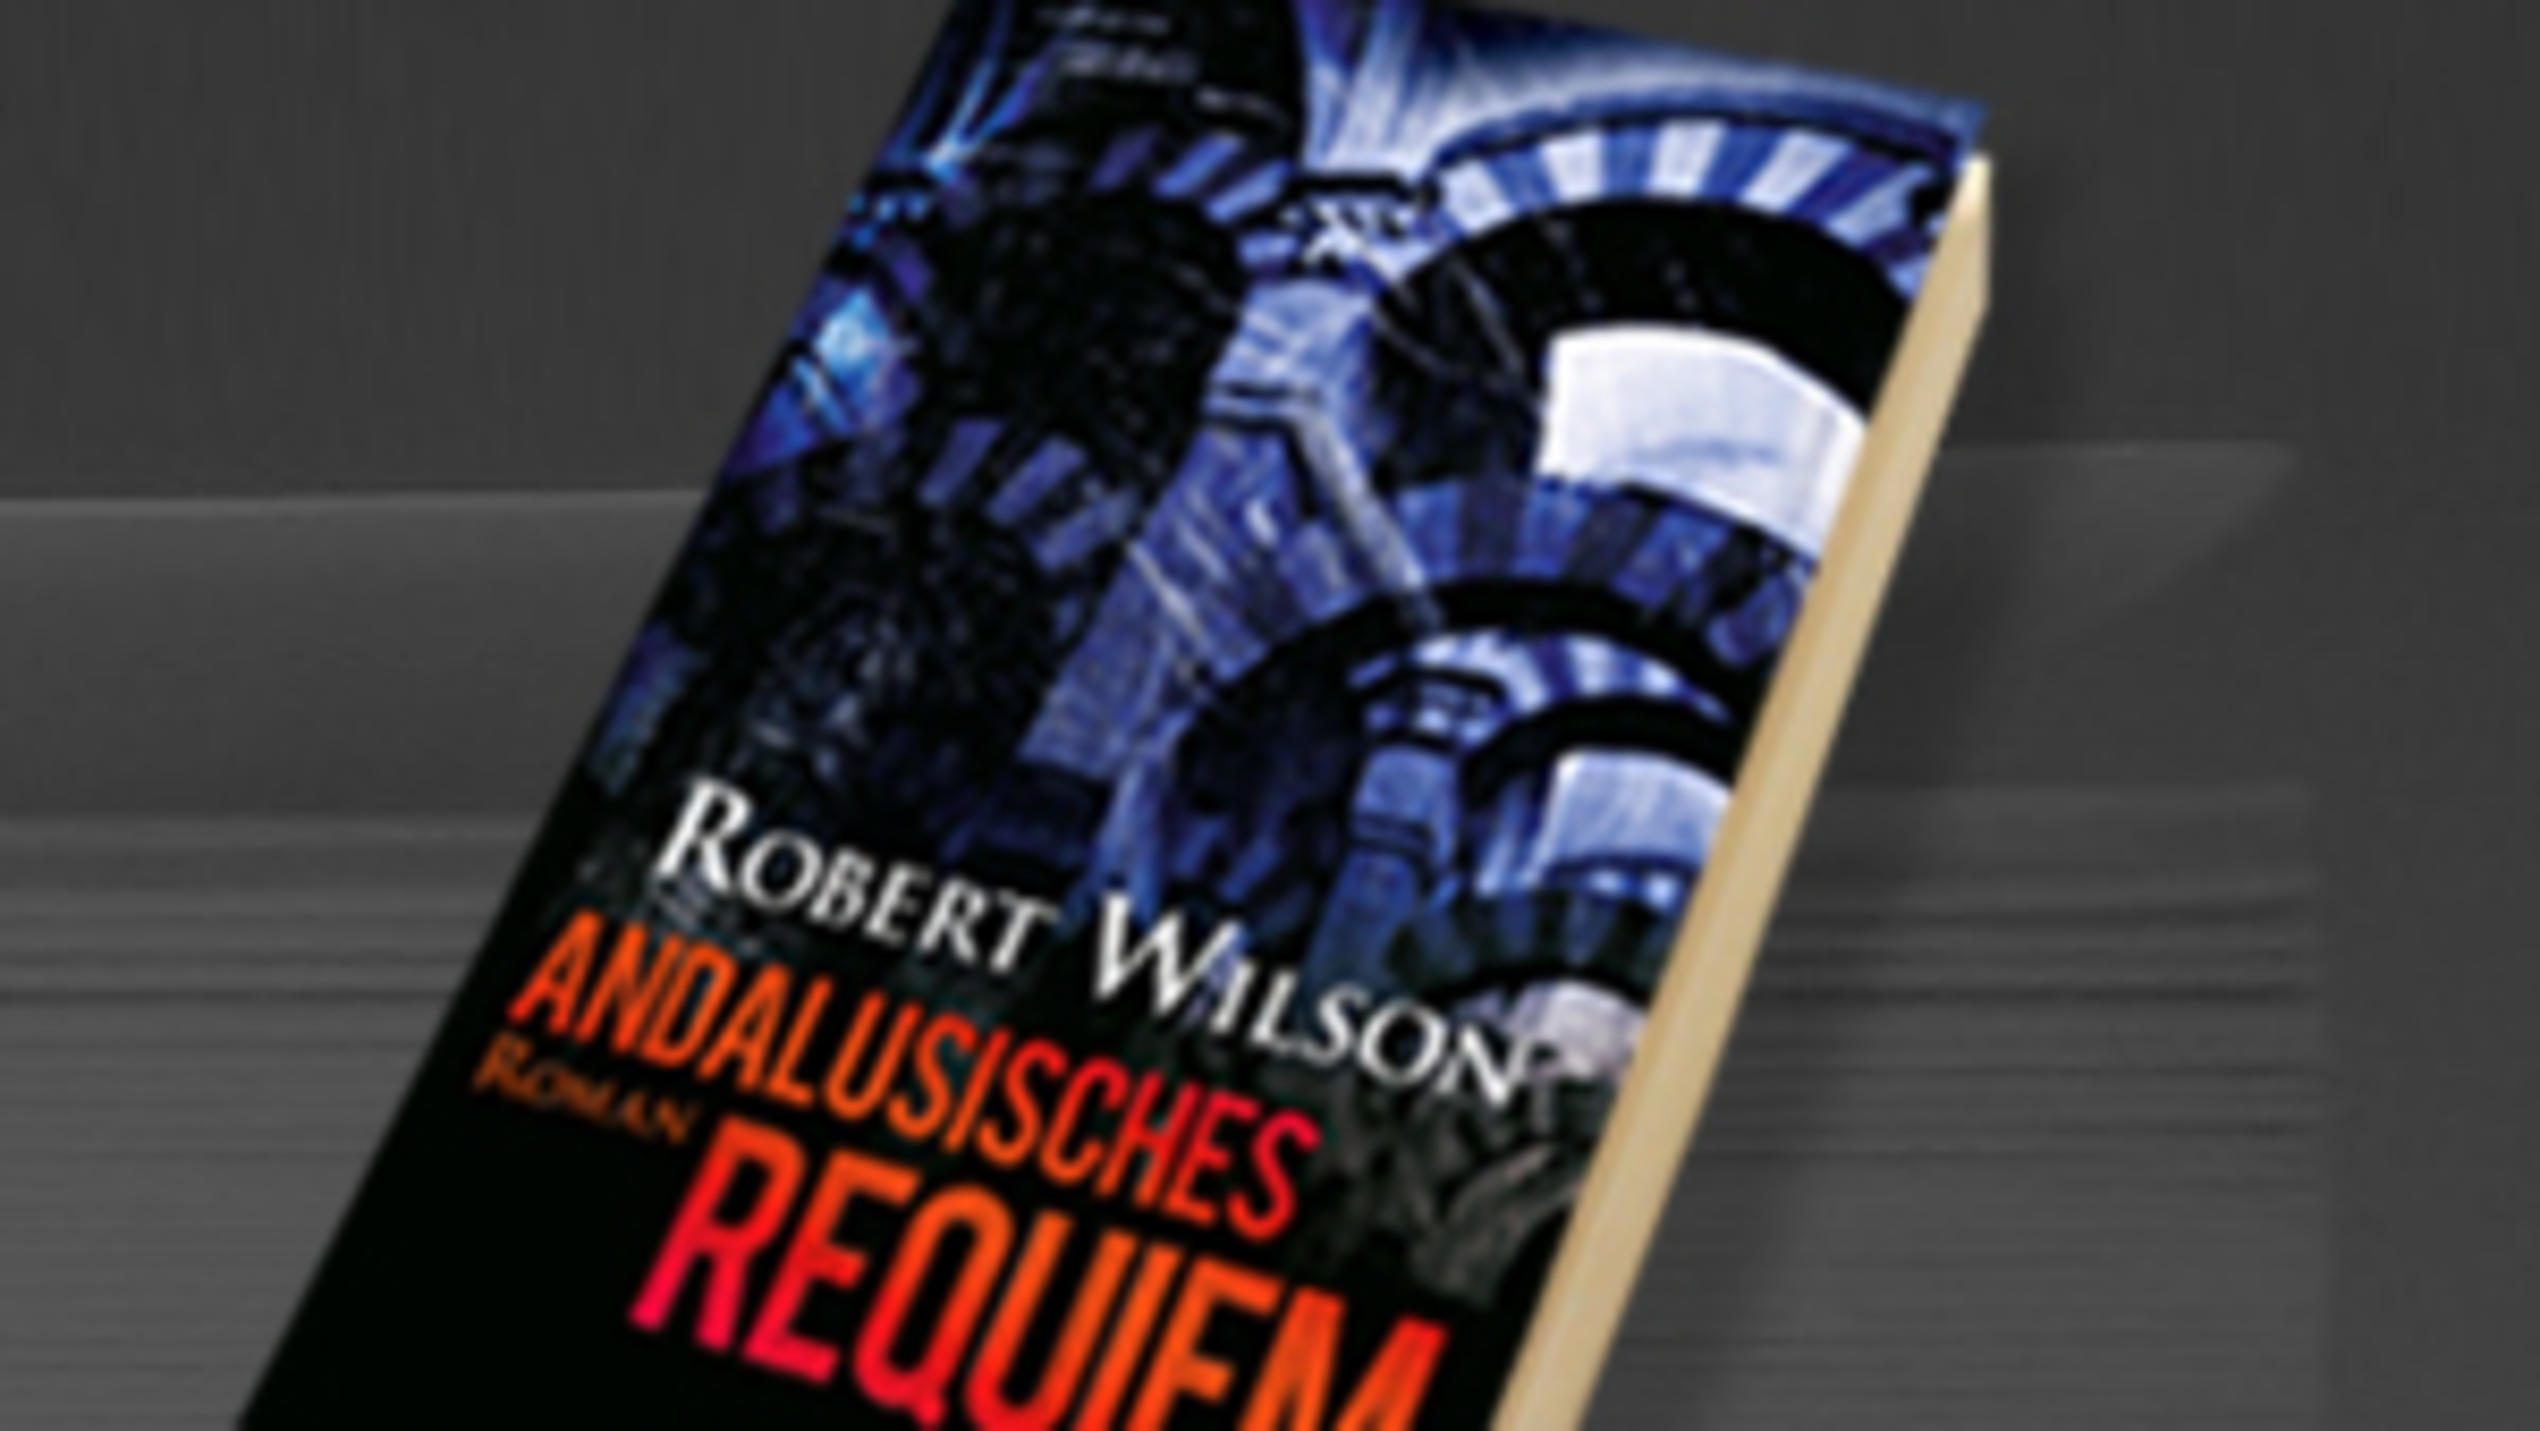 "Andalusisches Requiem"...